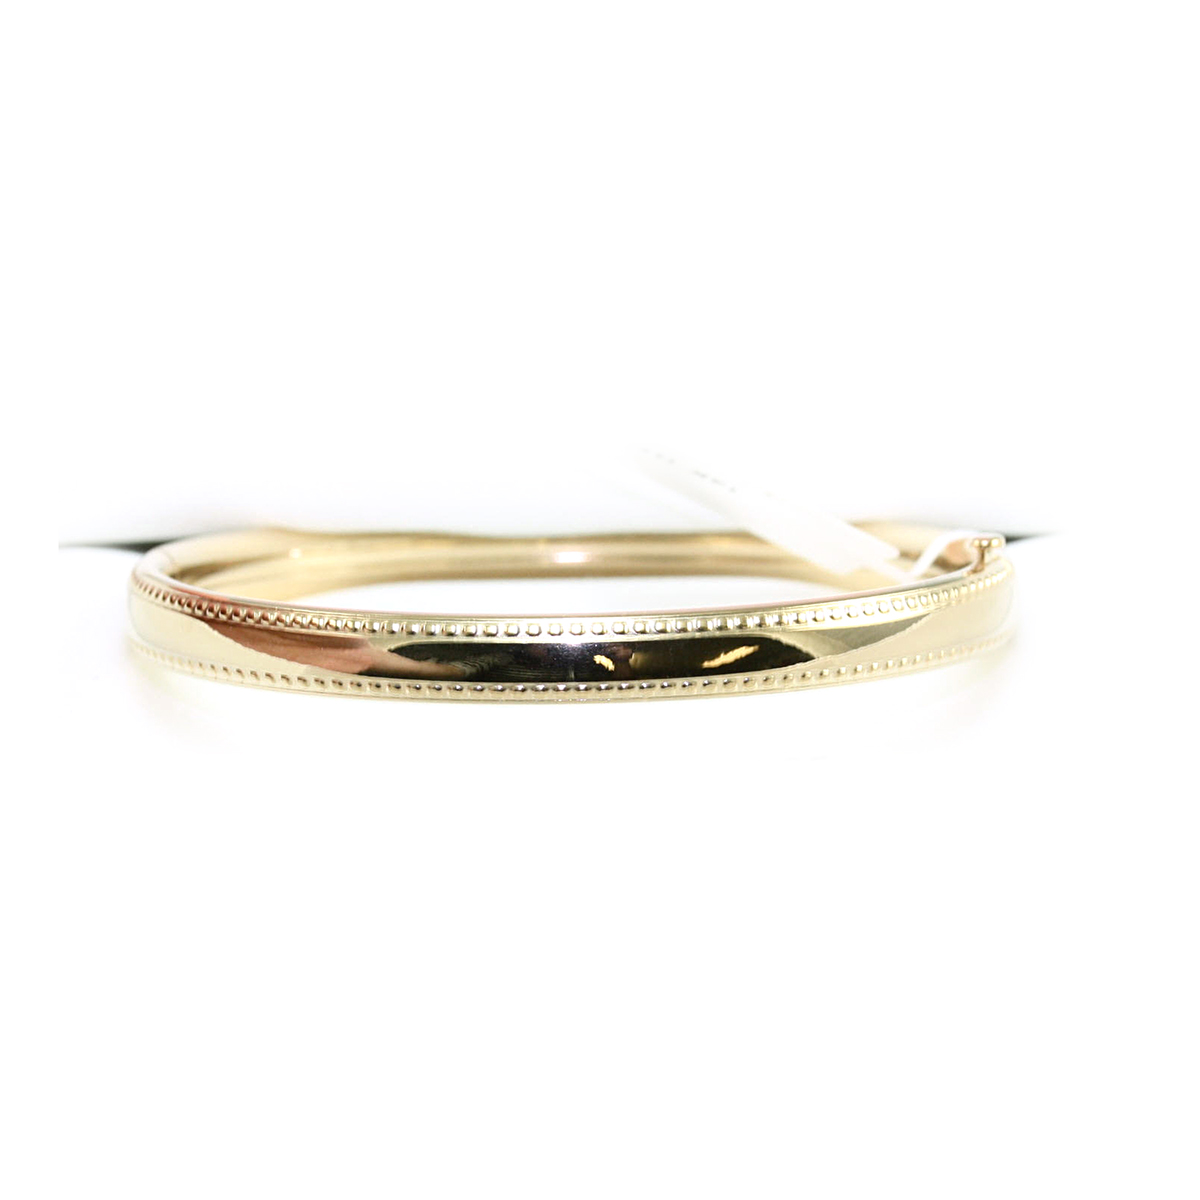 Gold Filled Bangle Bracelet With Beaded Edge Trim.